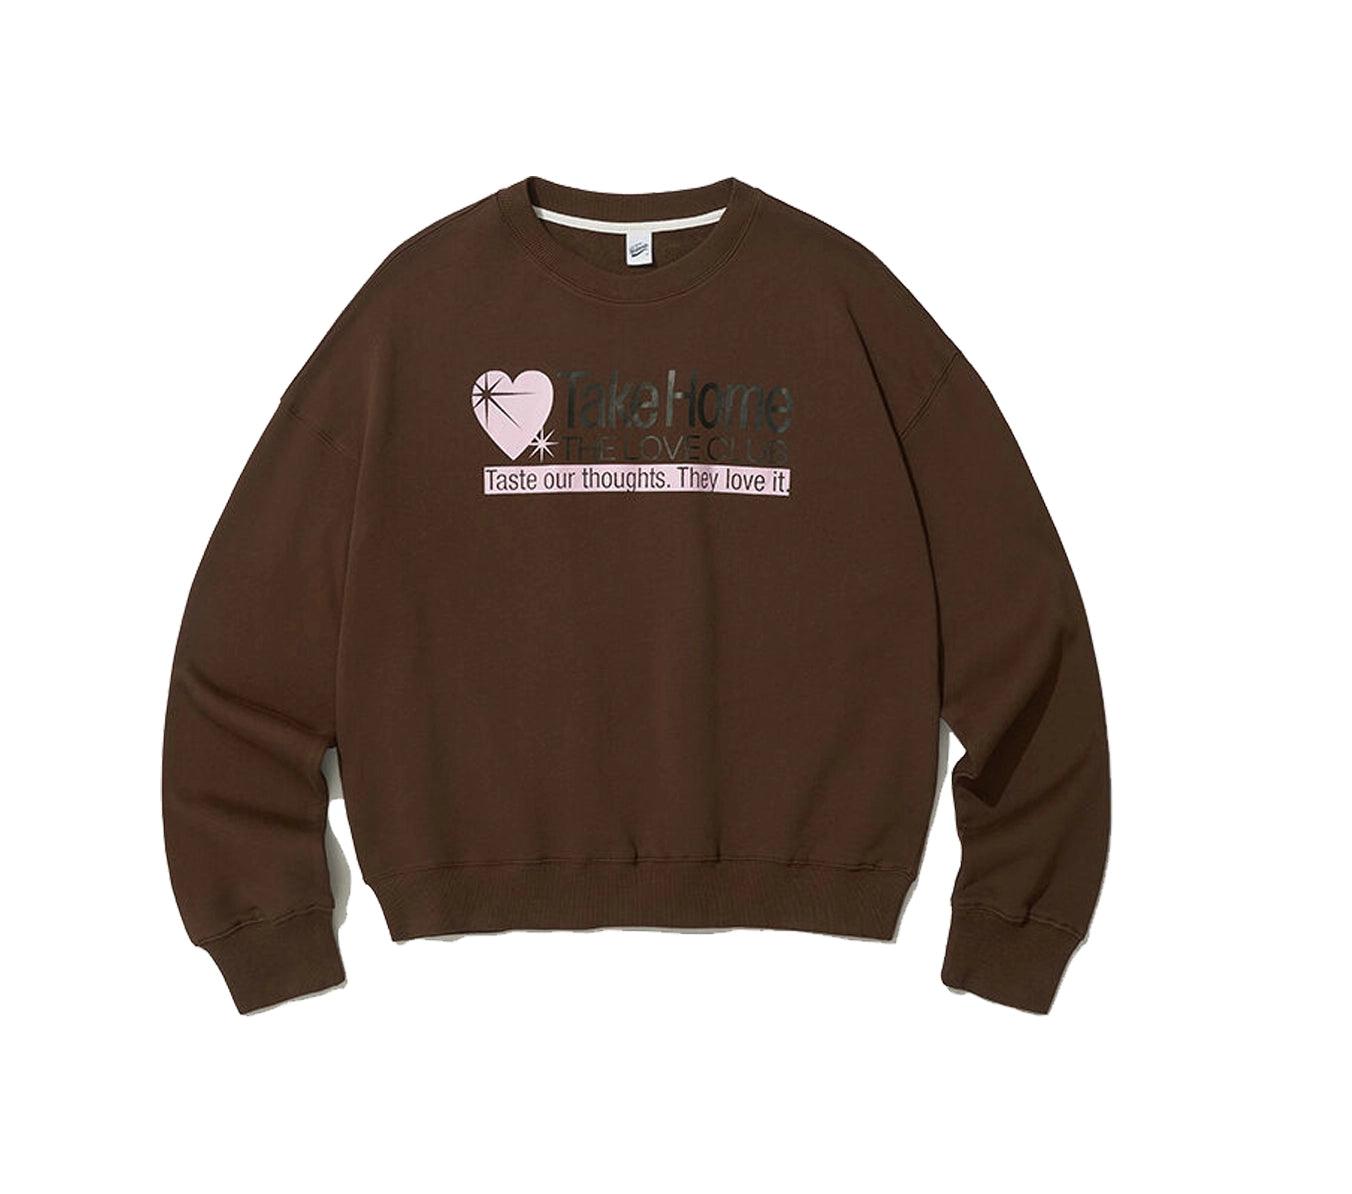 Partimento Take Home Sweatshirt - Brown - One size -